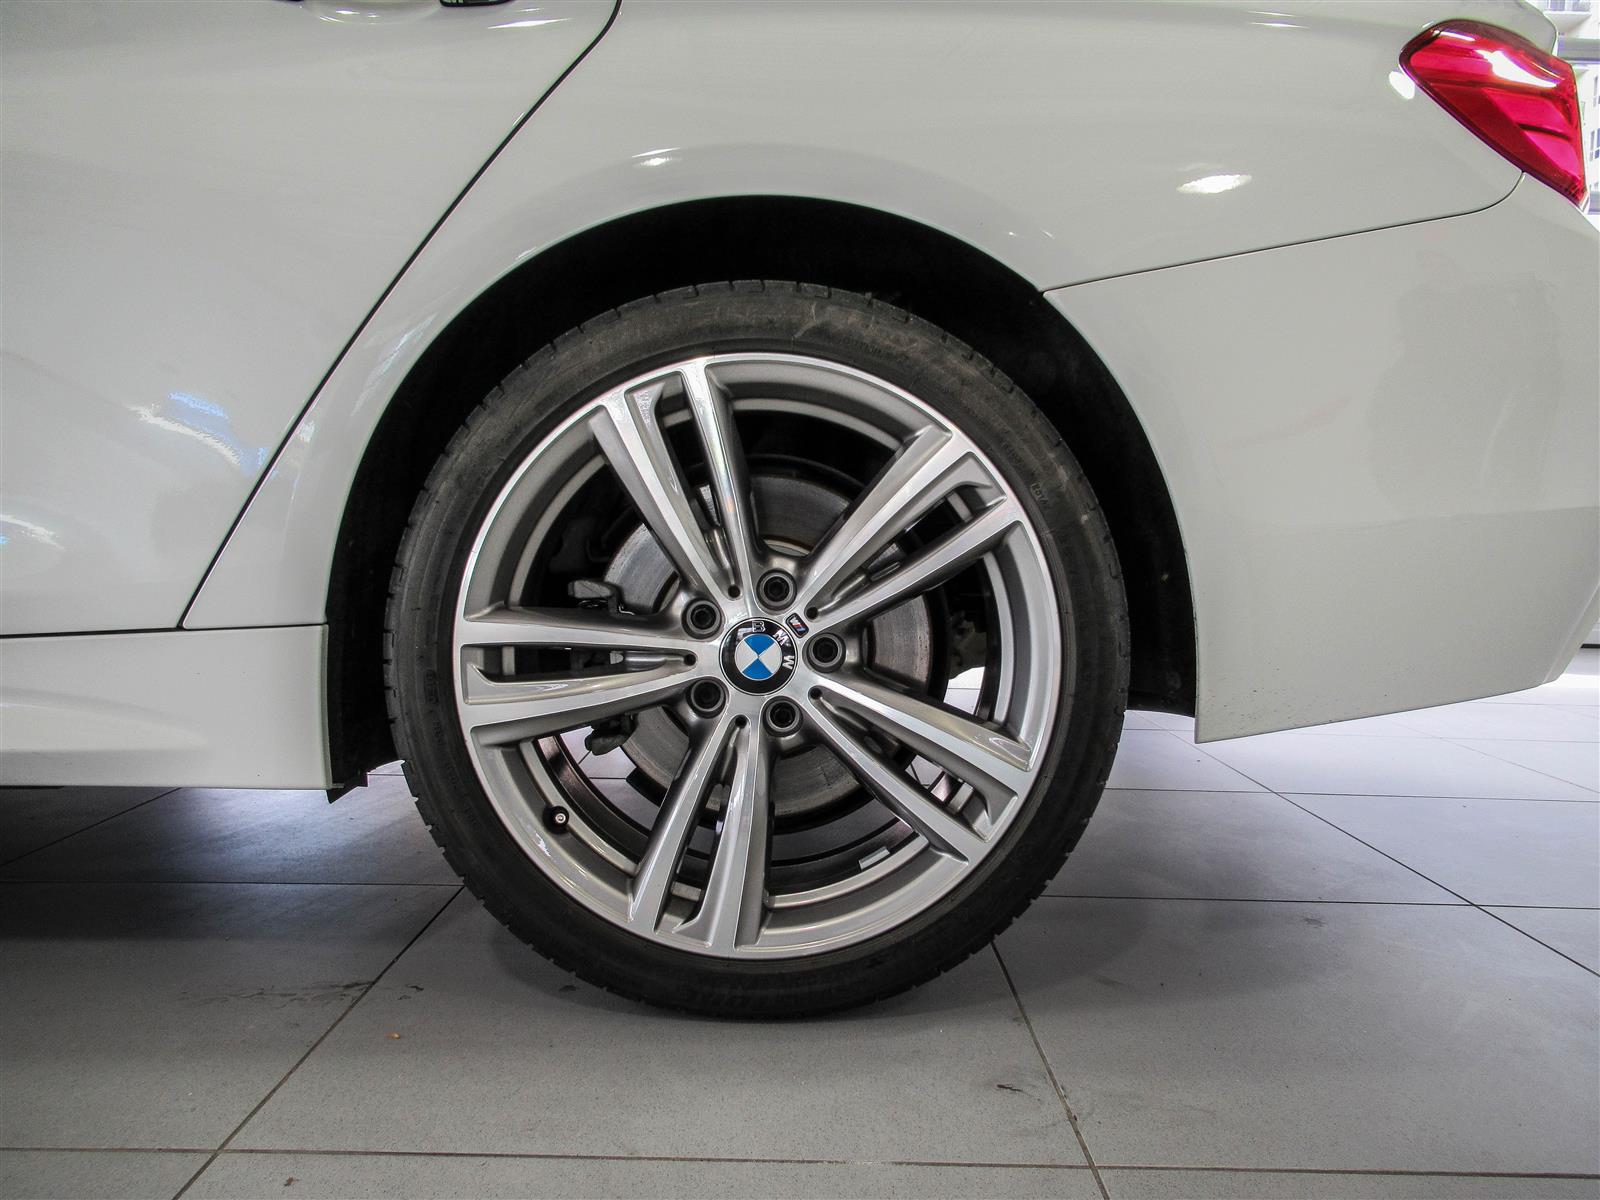 Preowned BMW 435i, Coupe, Toronto